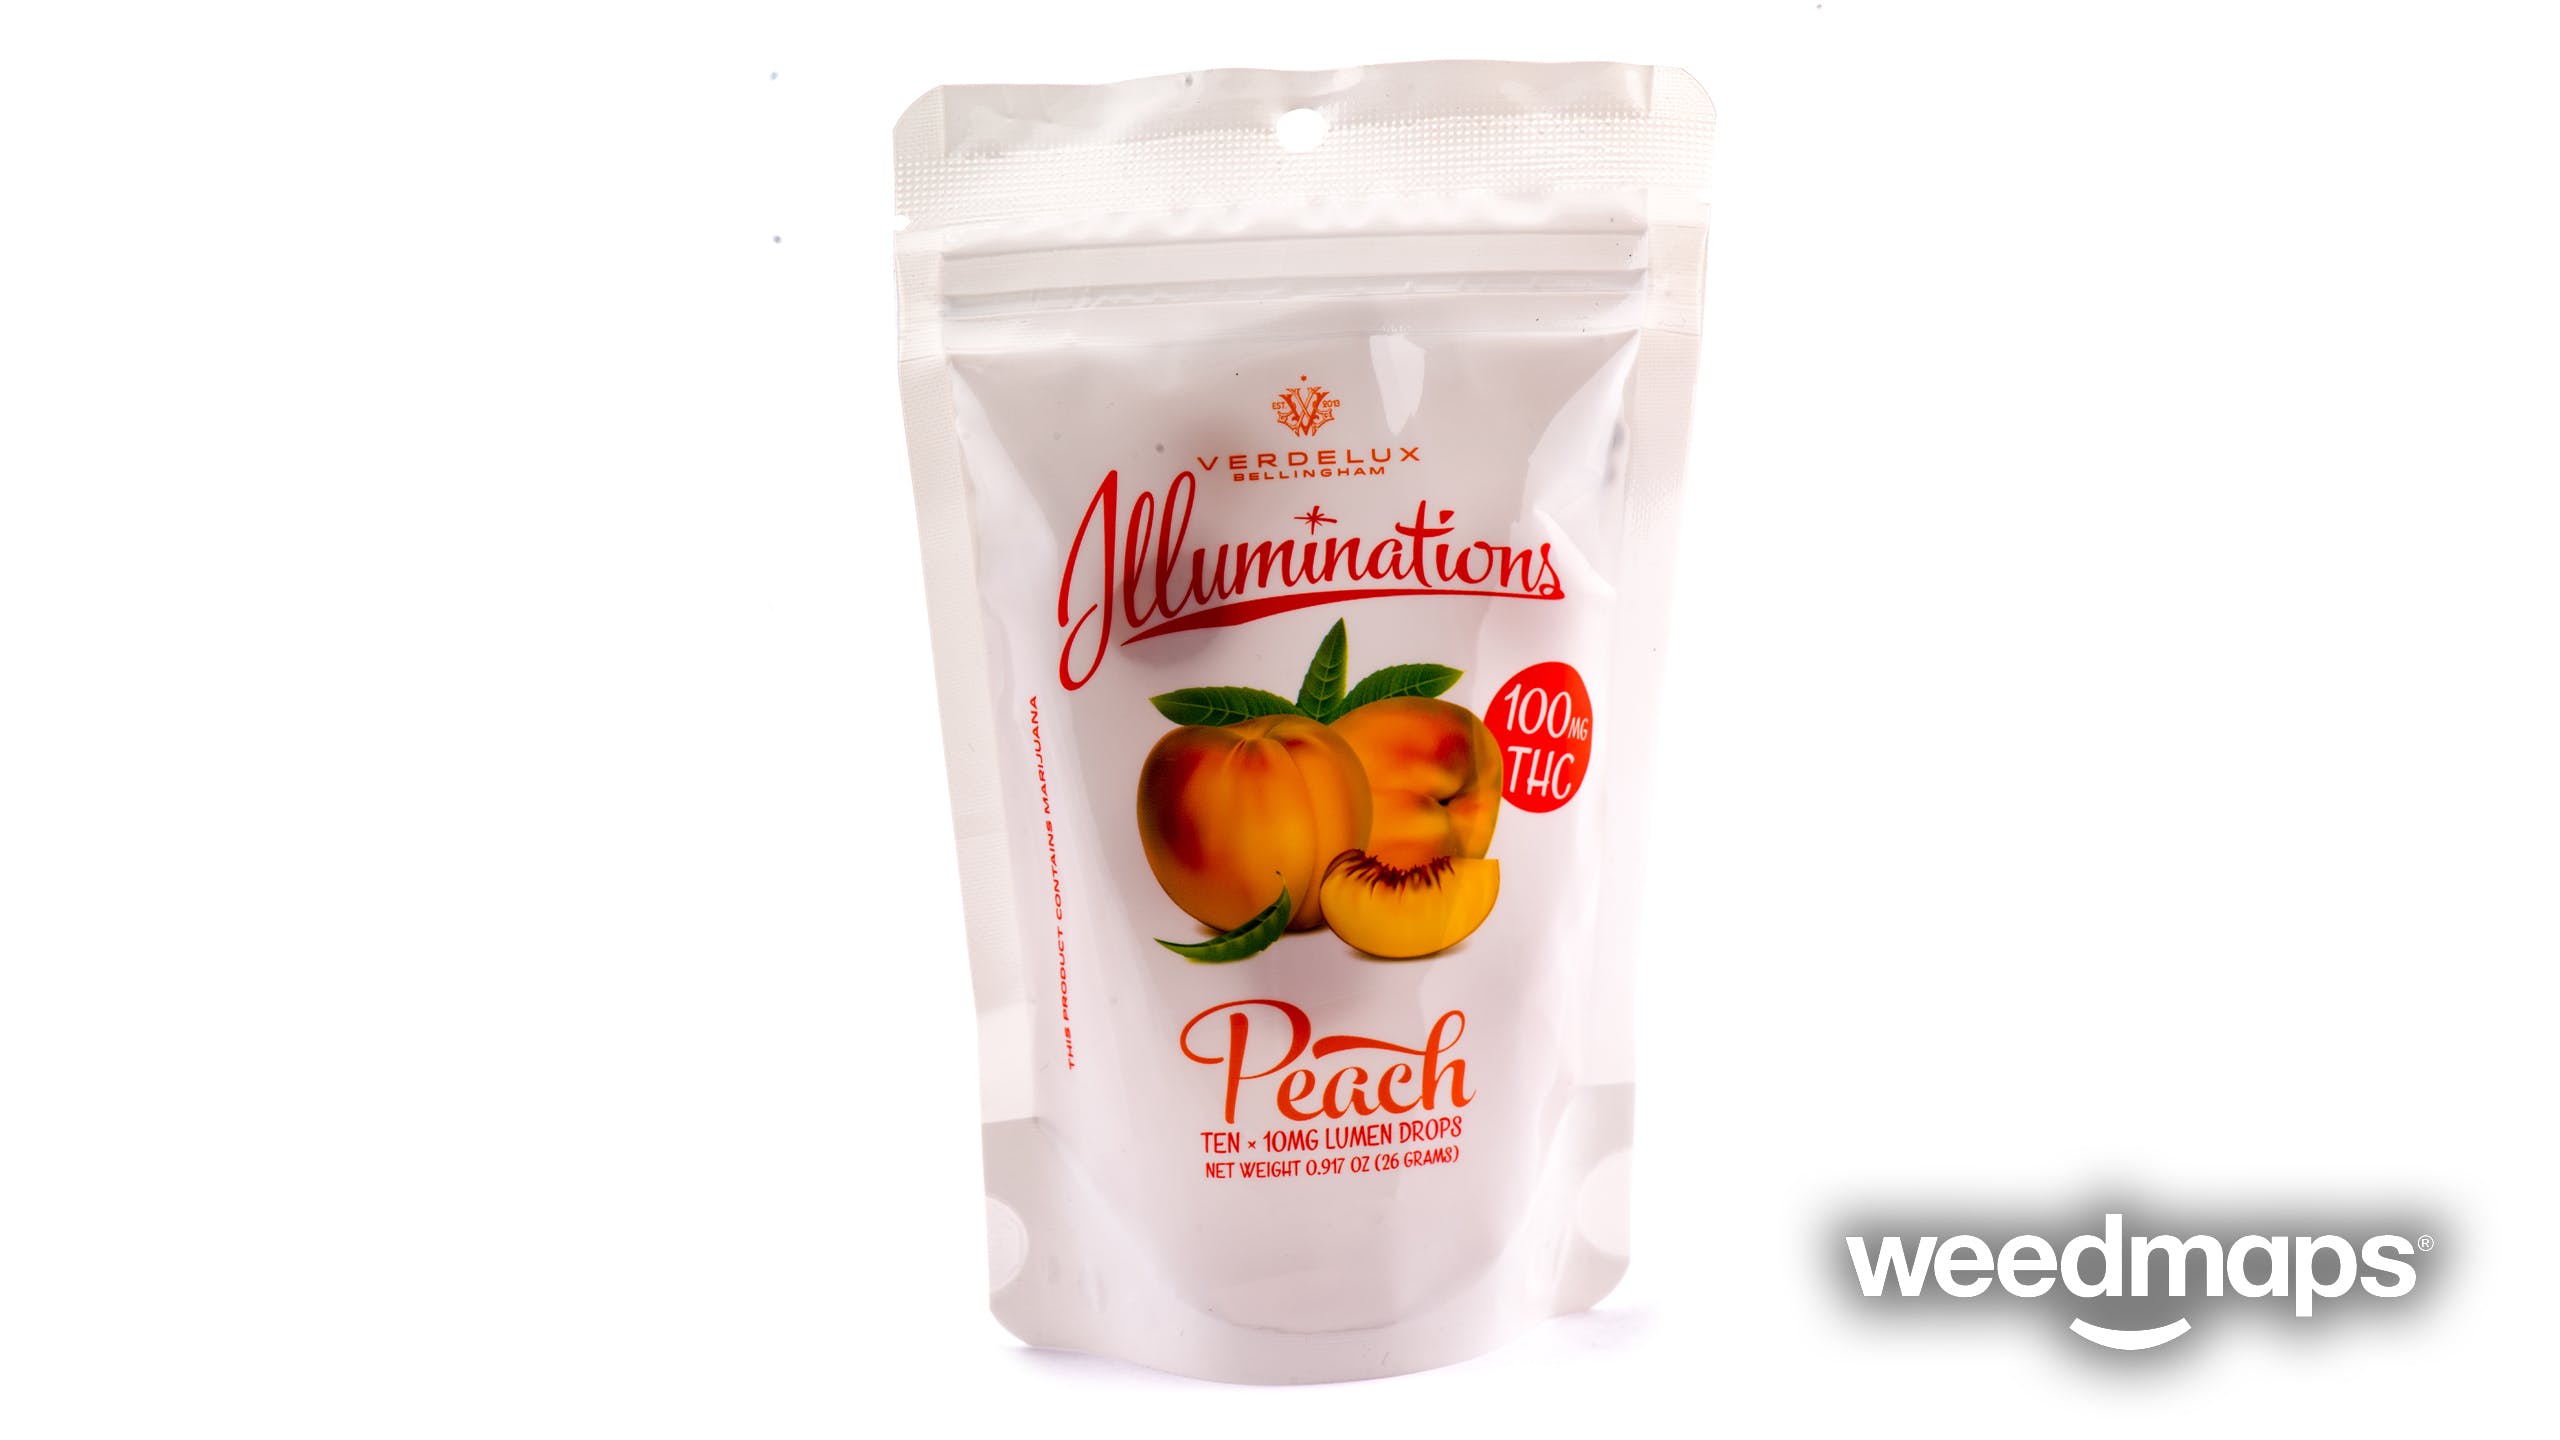 edible-verdelux-100mg-peach-illuminations